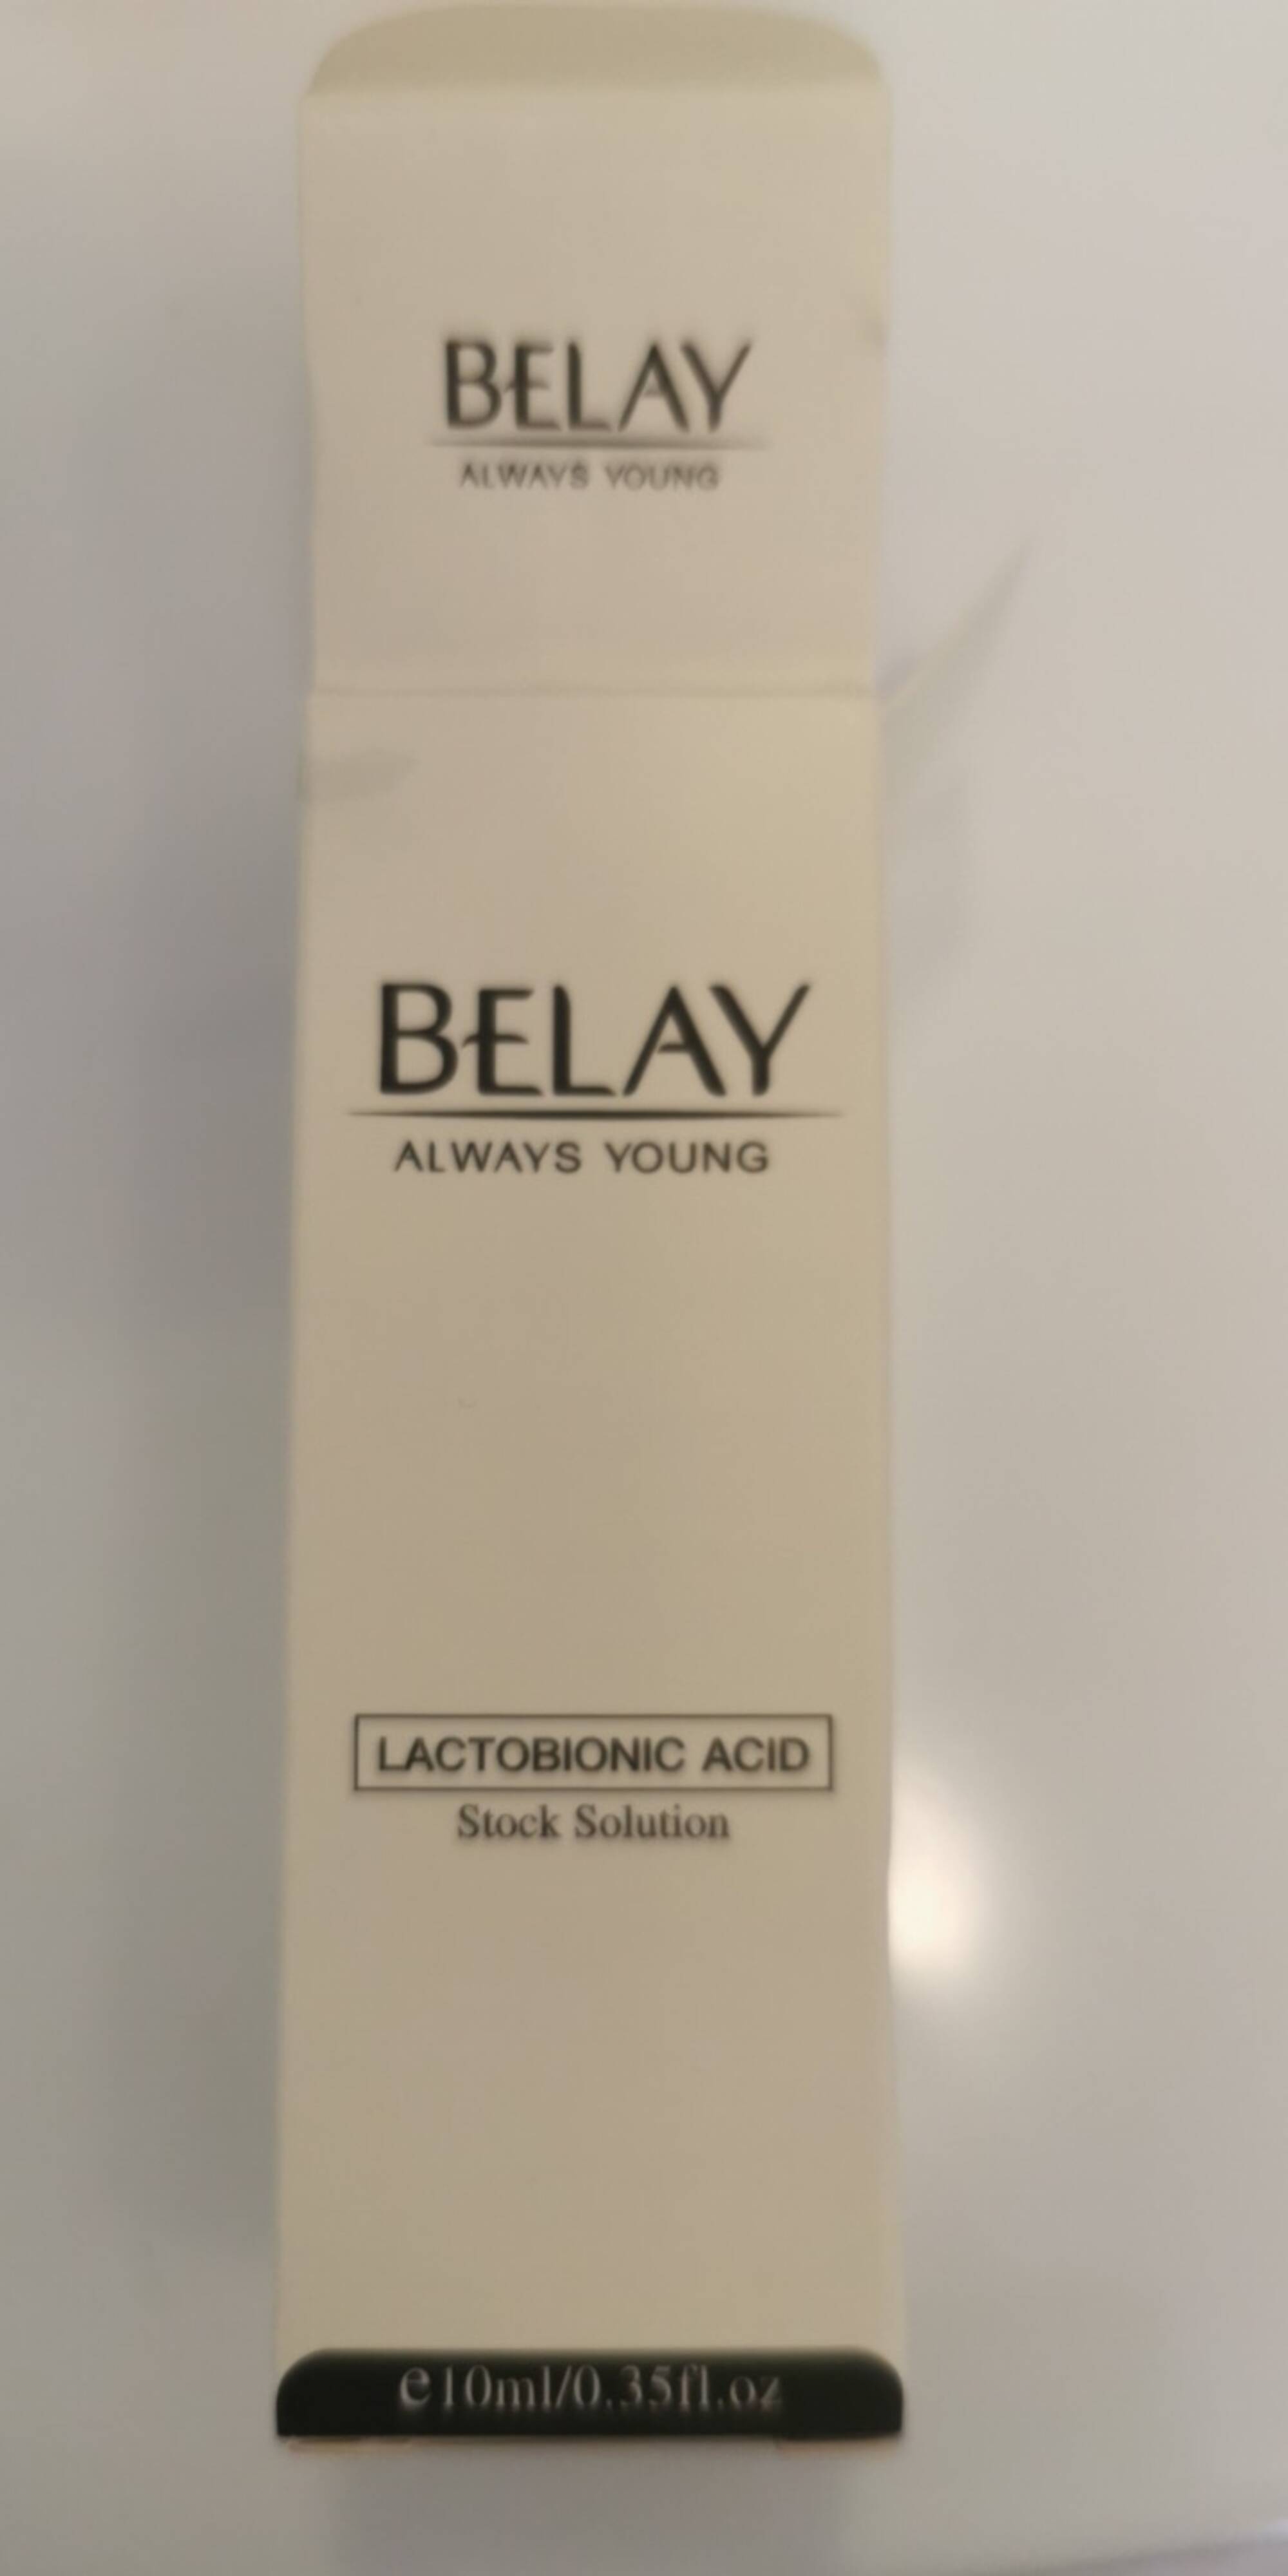 BELAY - Lactobionic acid - Stock solution